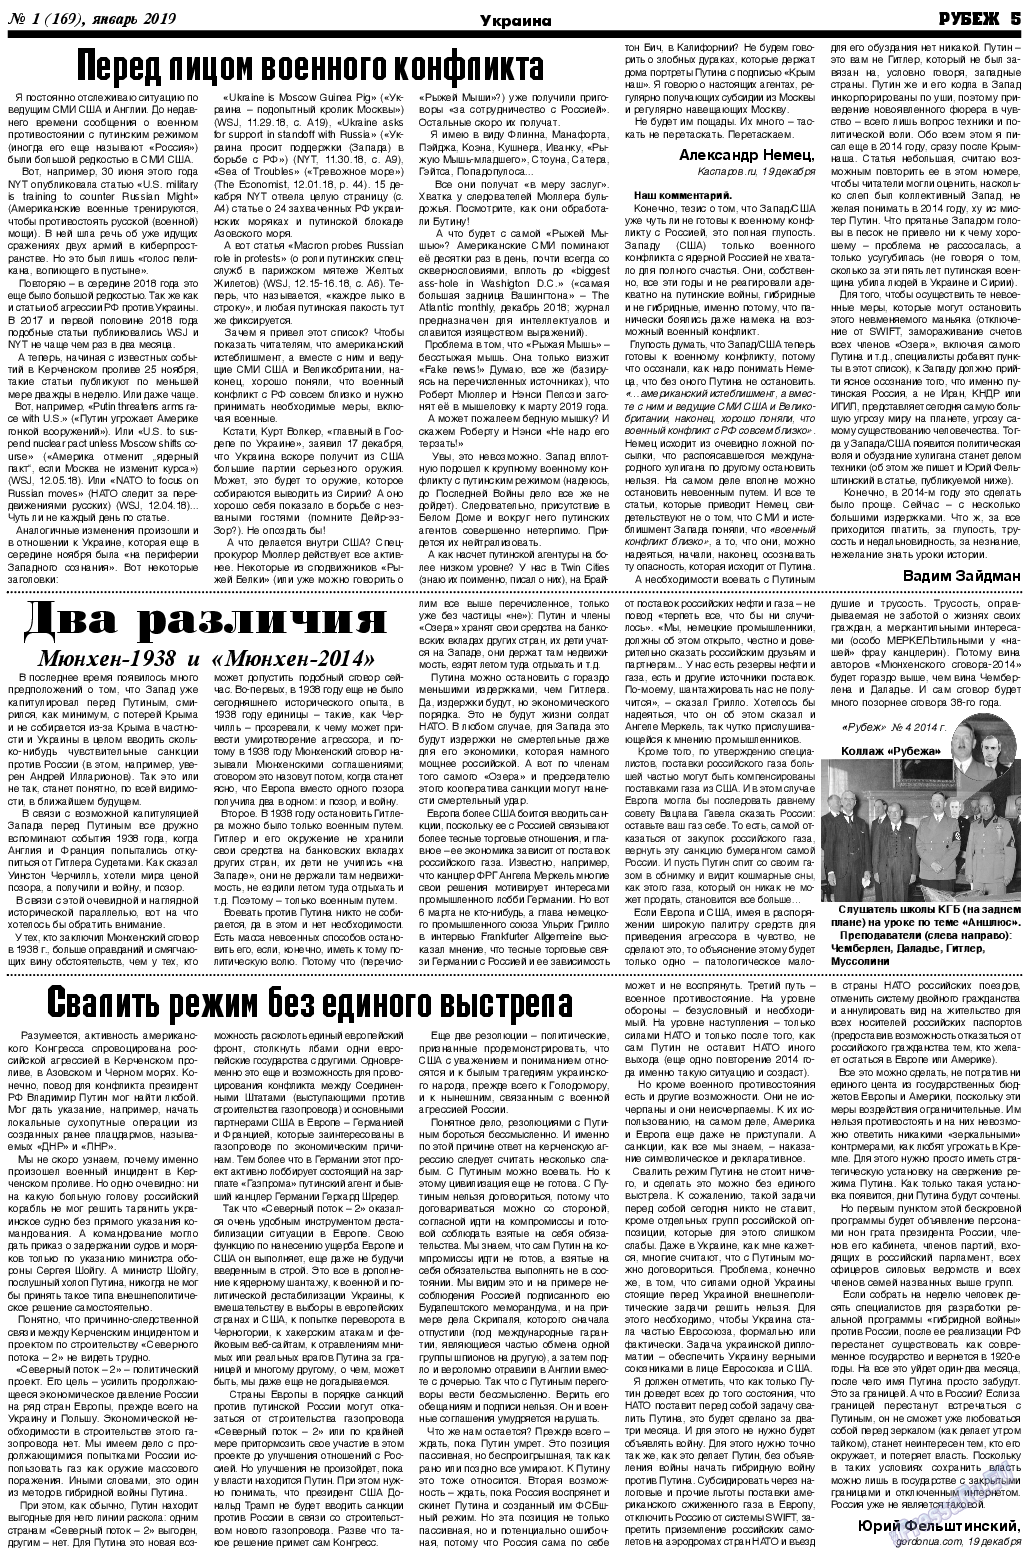 Рубеж, газета. 2019 №1 стр.5